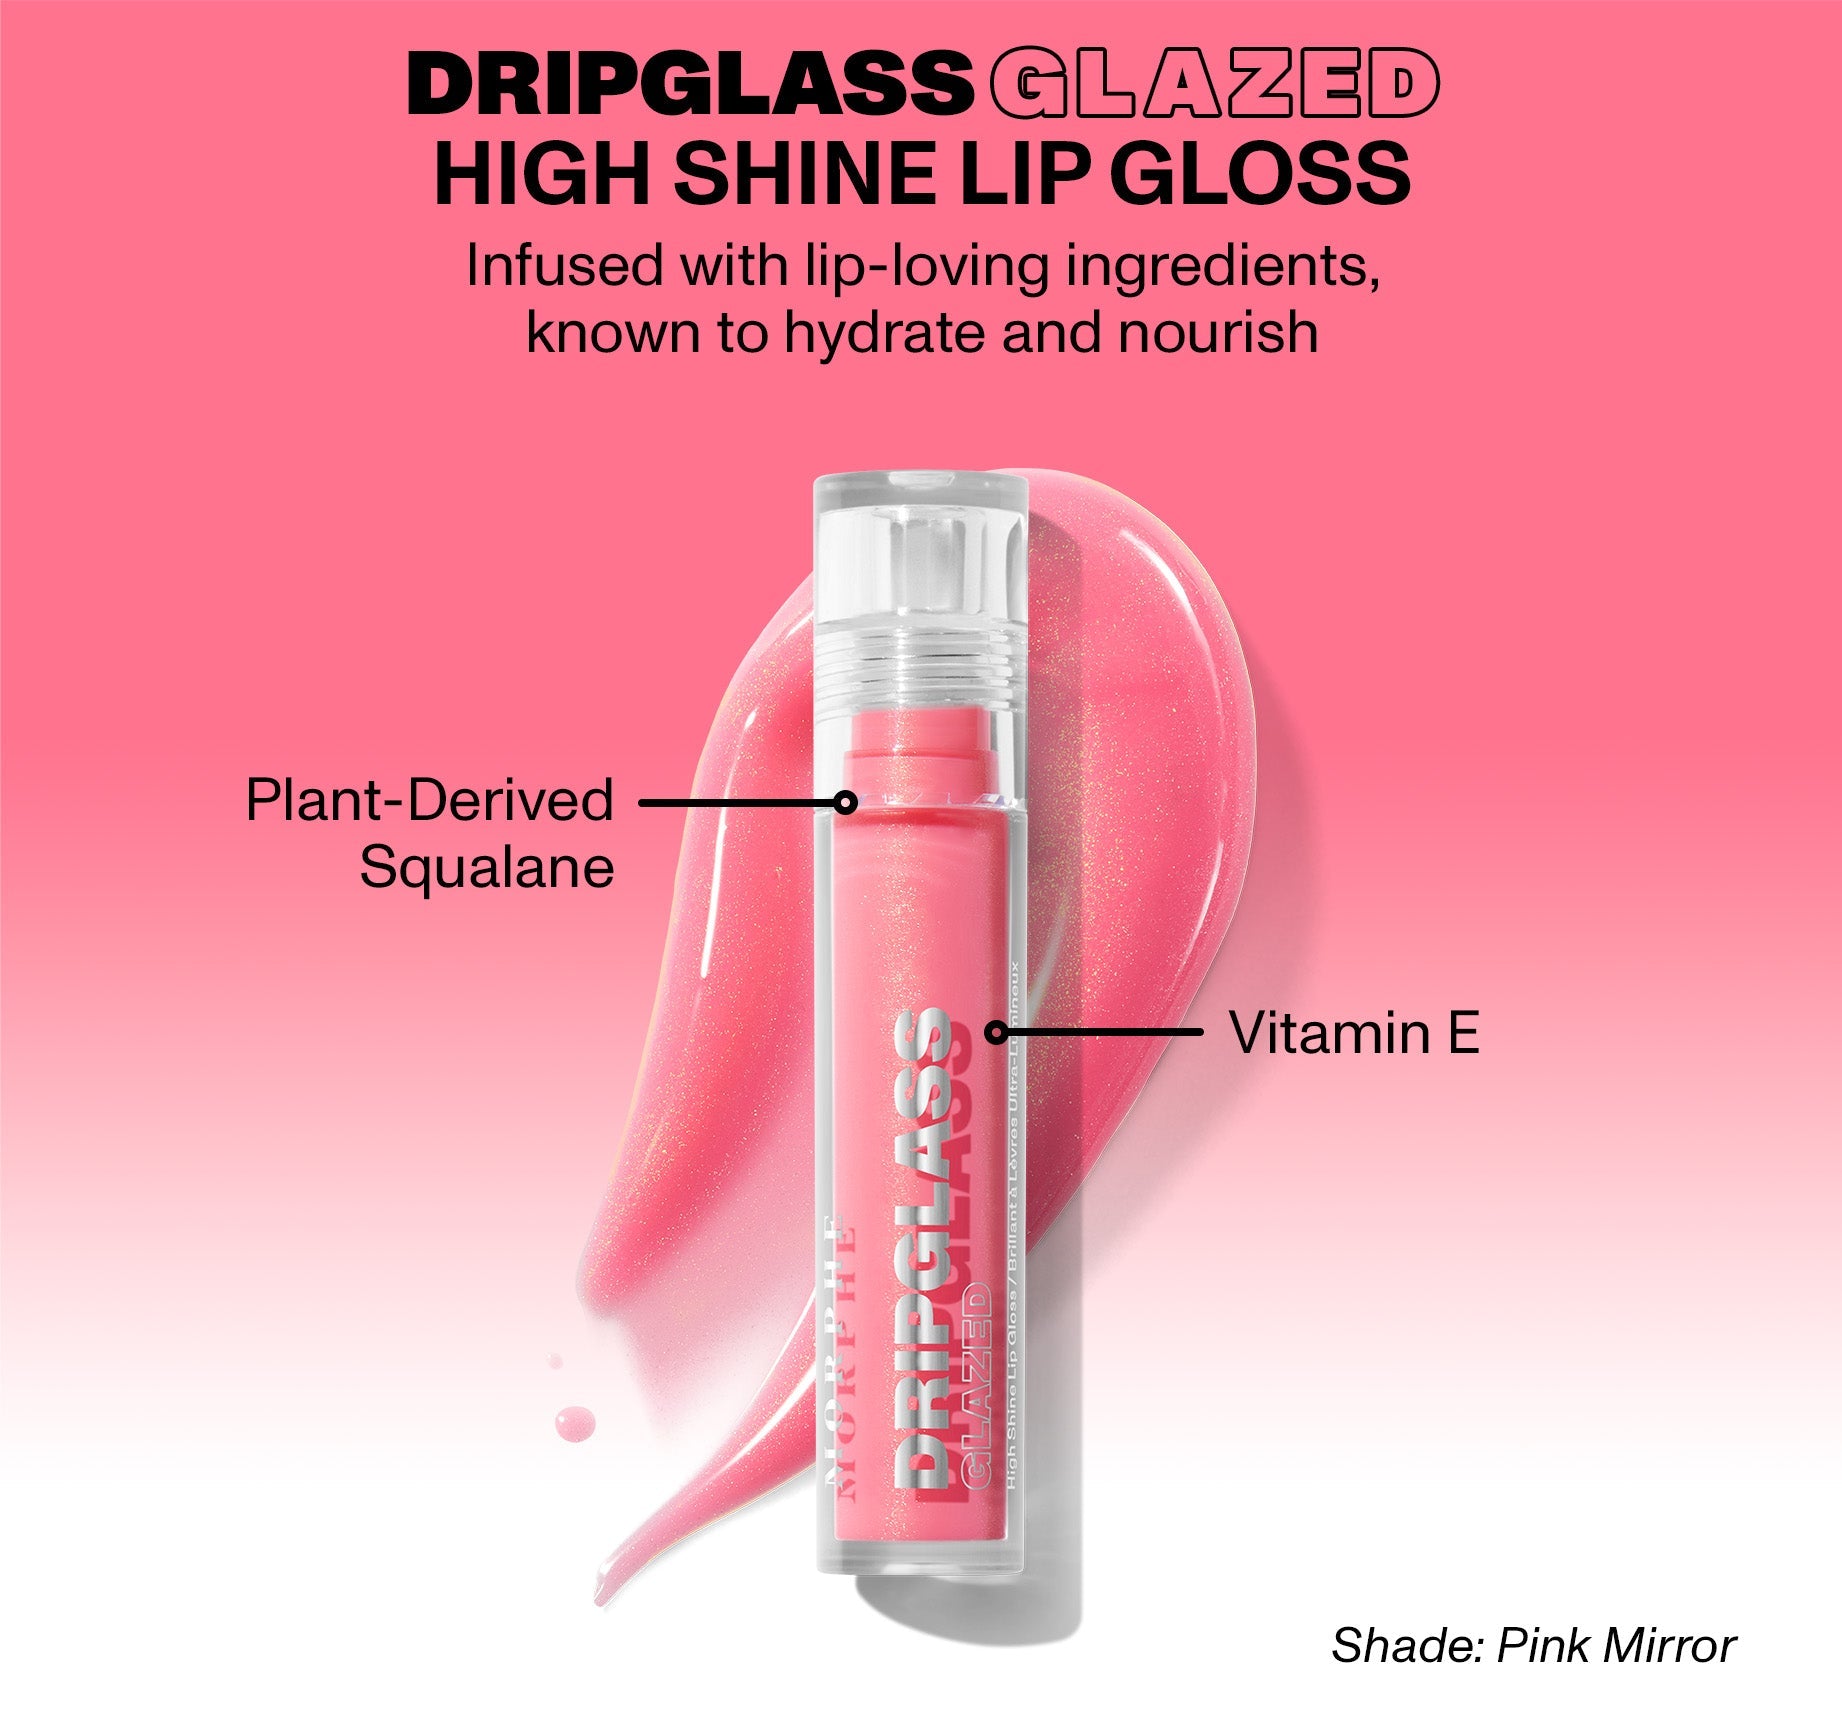 Dripglass Glazed High Shine Lip Gloss - Pink Mirror - Image 9